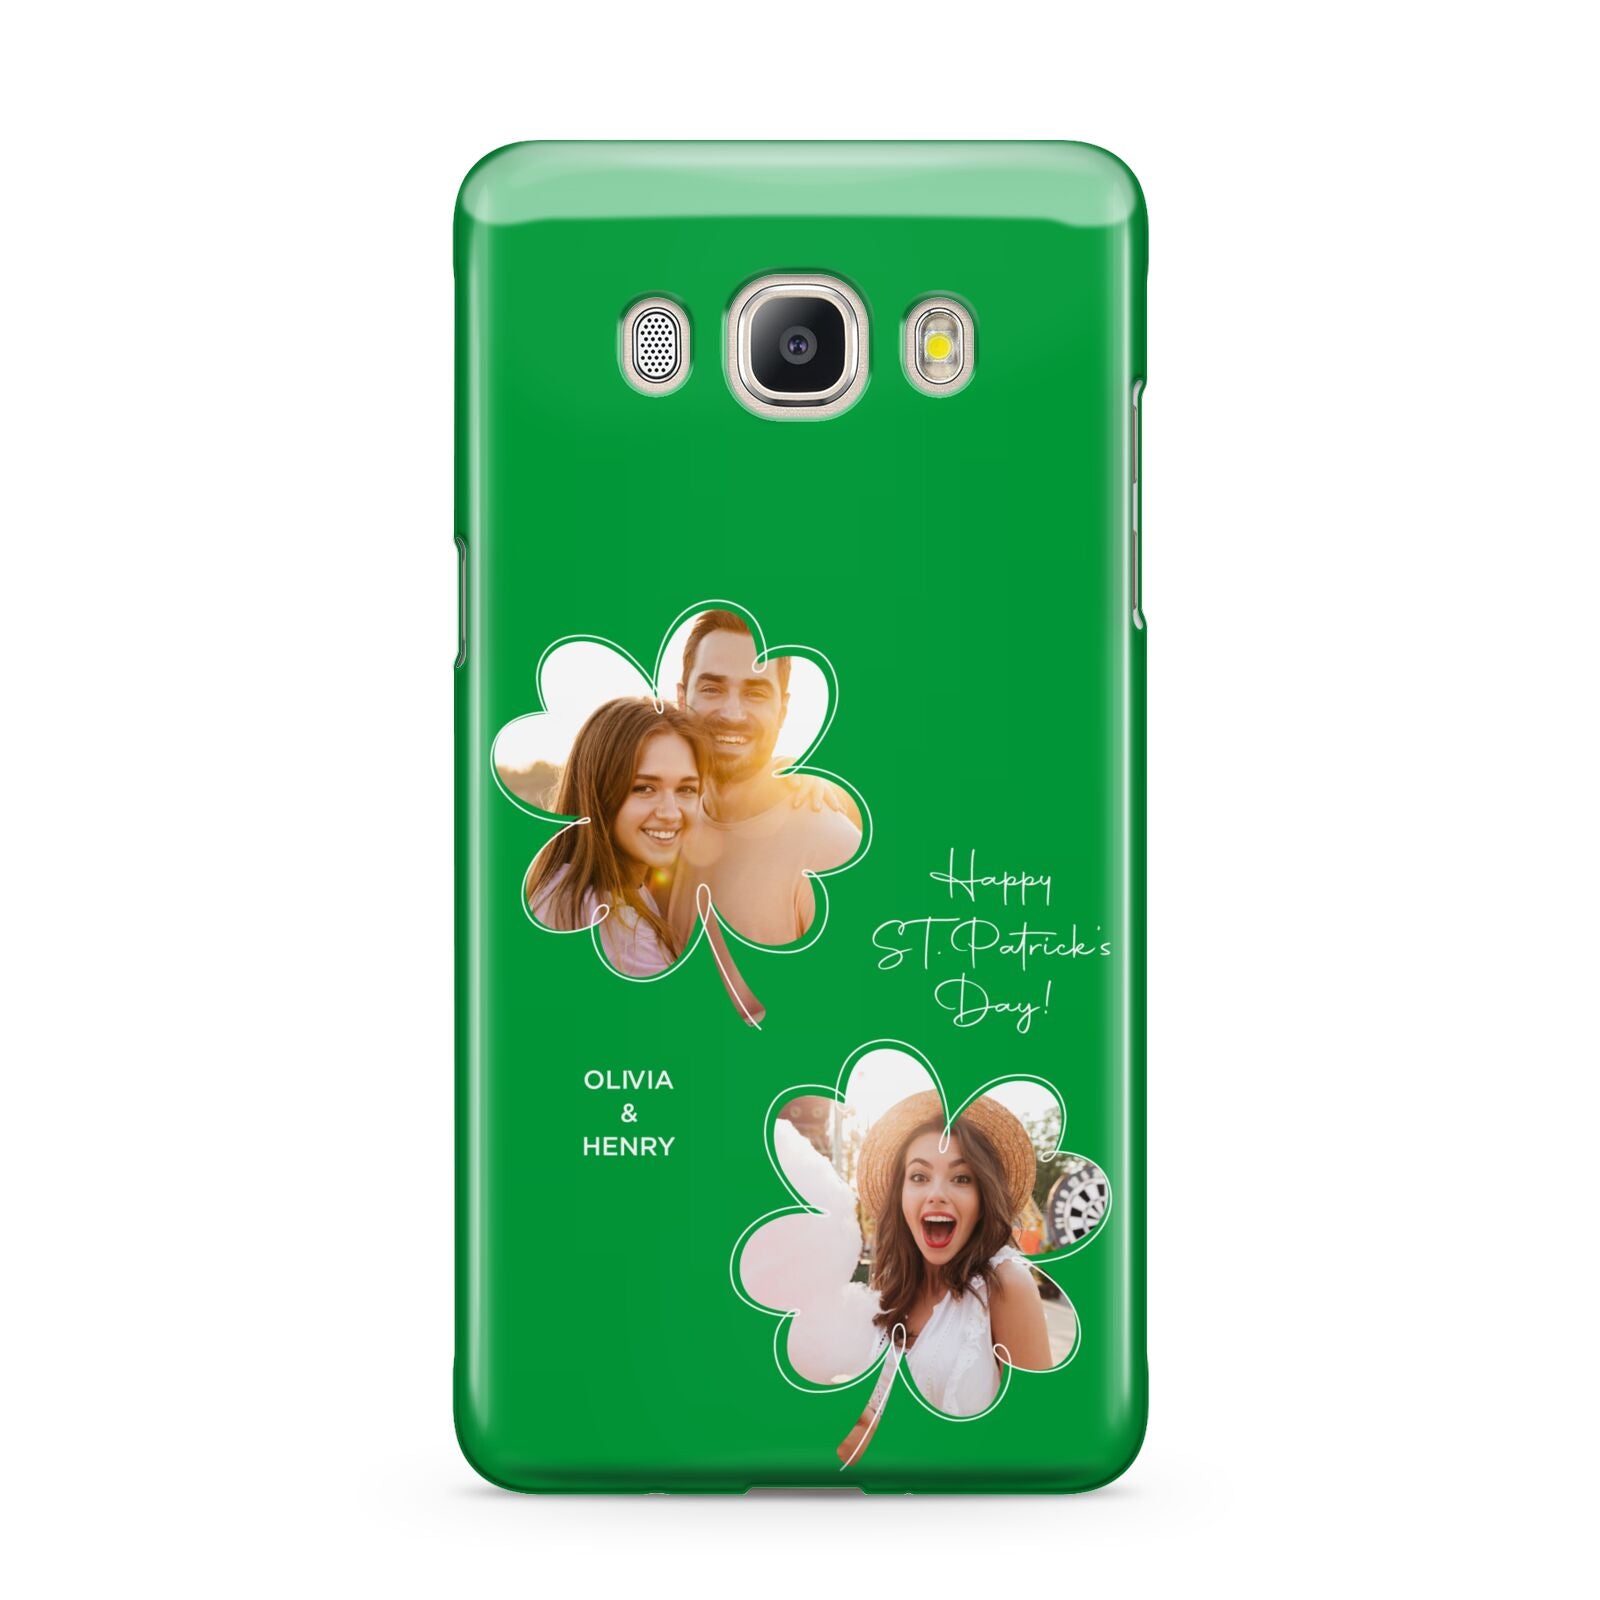 Personalised Photo St Patricks Day Samsung Galaxy J5 2016 Case